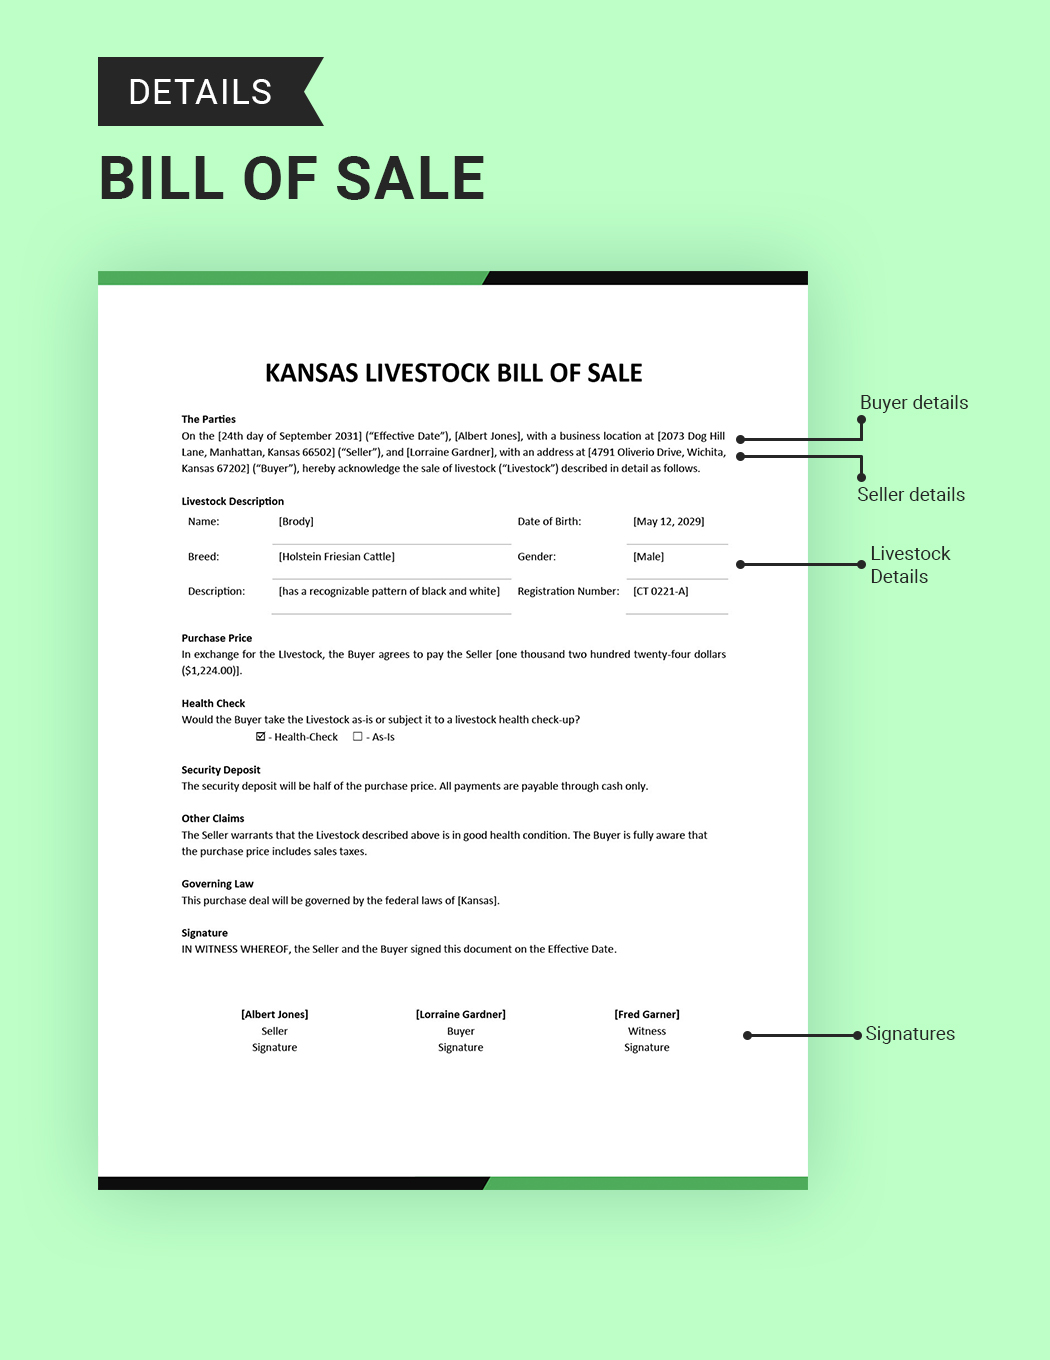 Kansas Livestock Bill of Sale Template